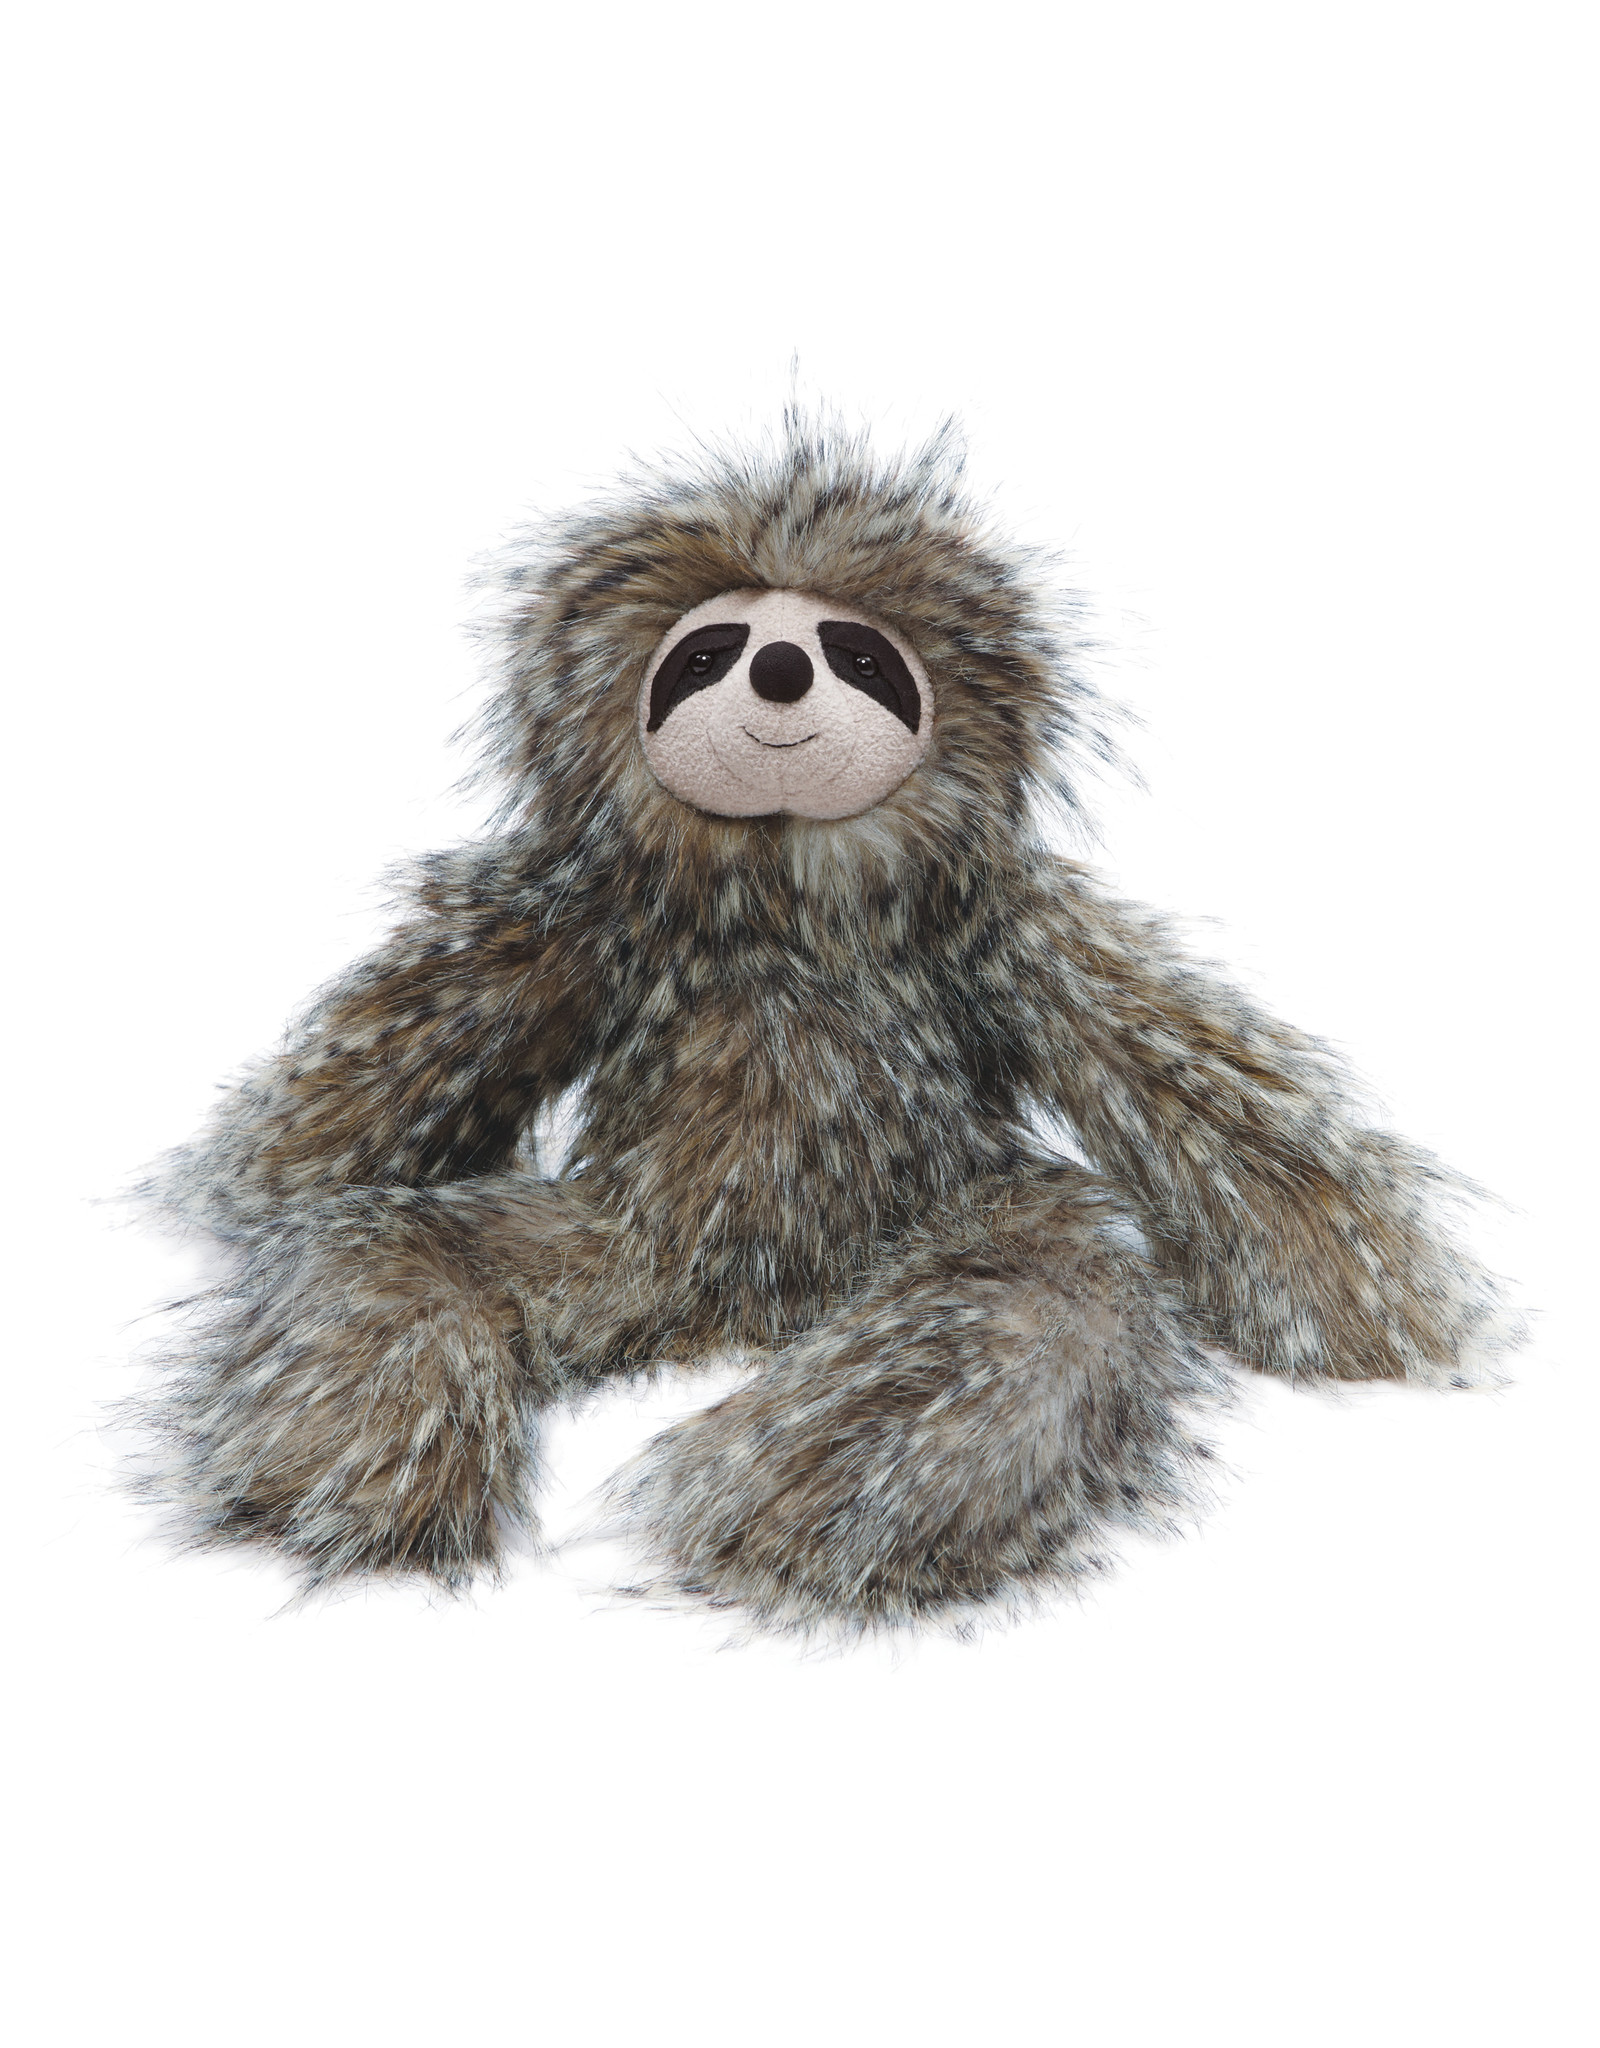 jellycat sloth